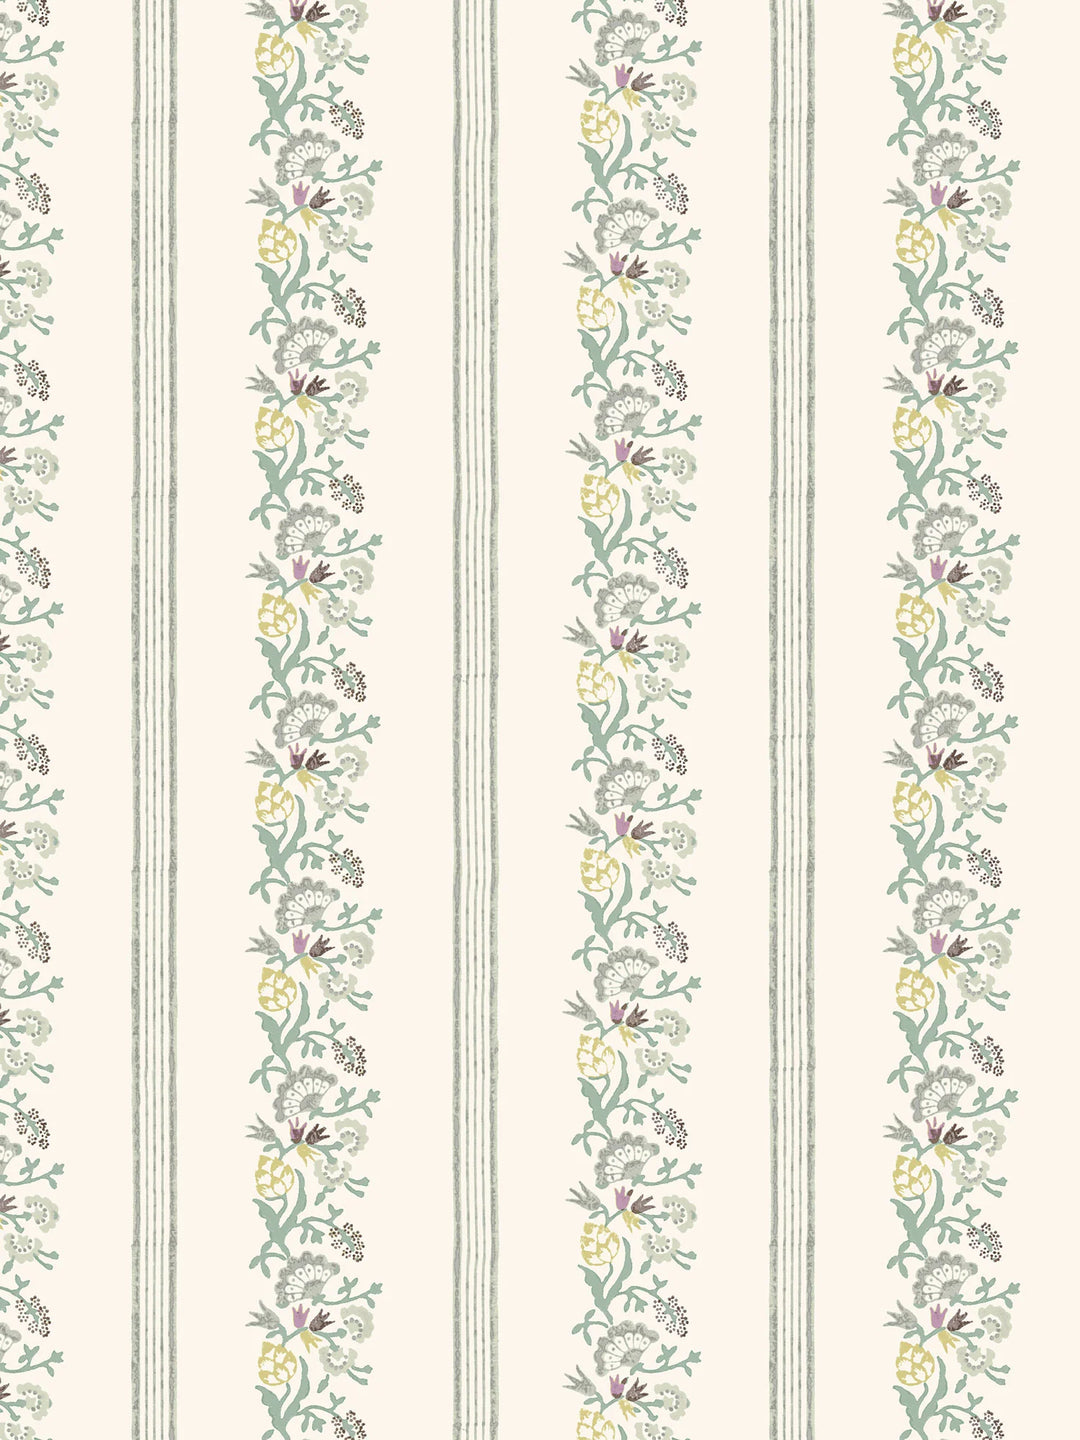 trousseau-wallpaper-sage-stripe-botanical-floral-ditsy-design